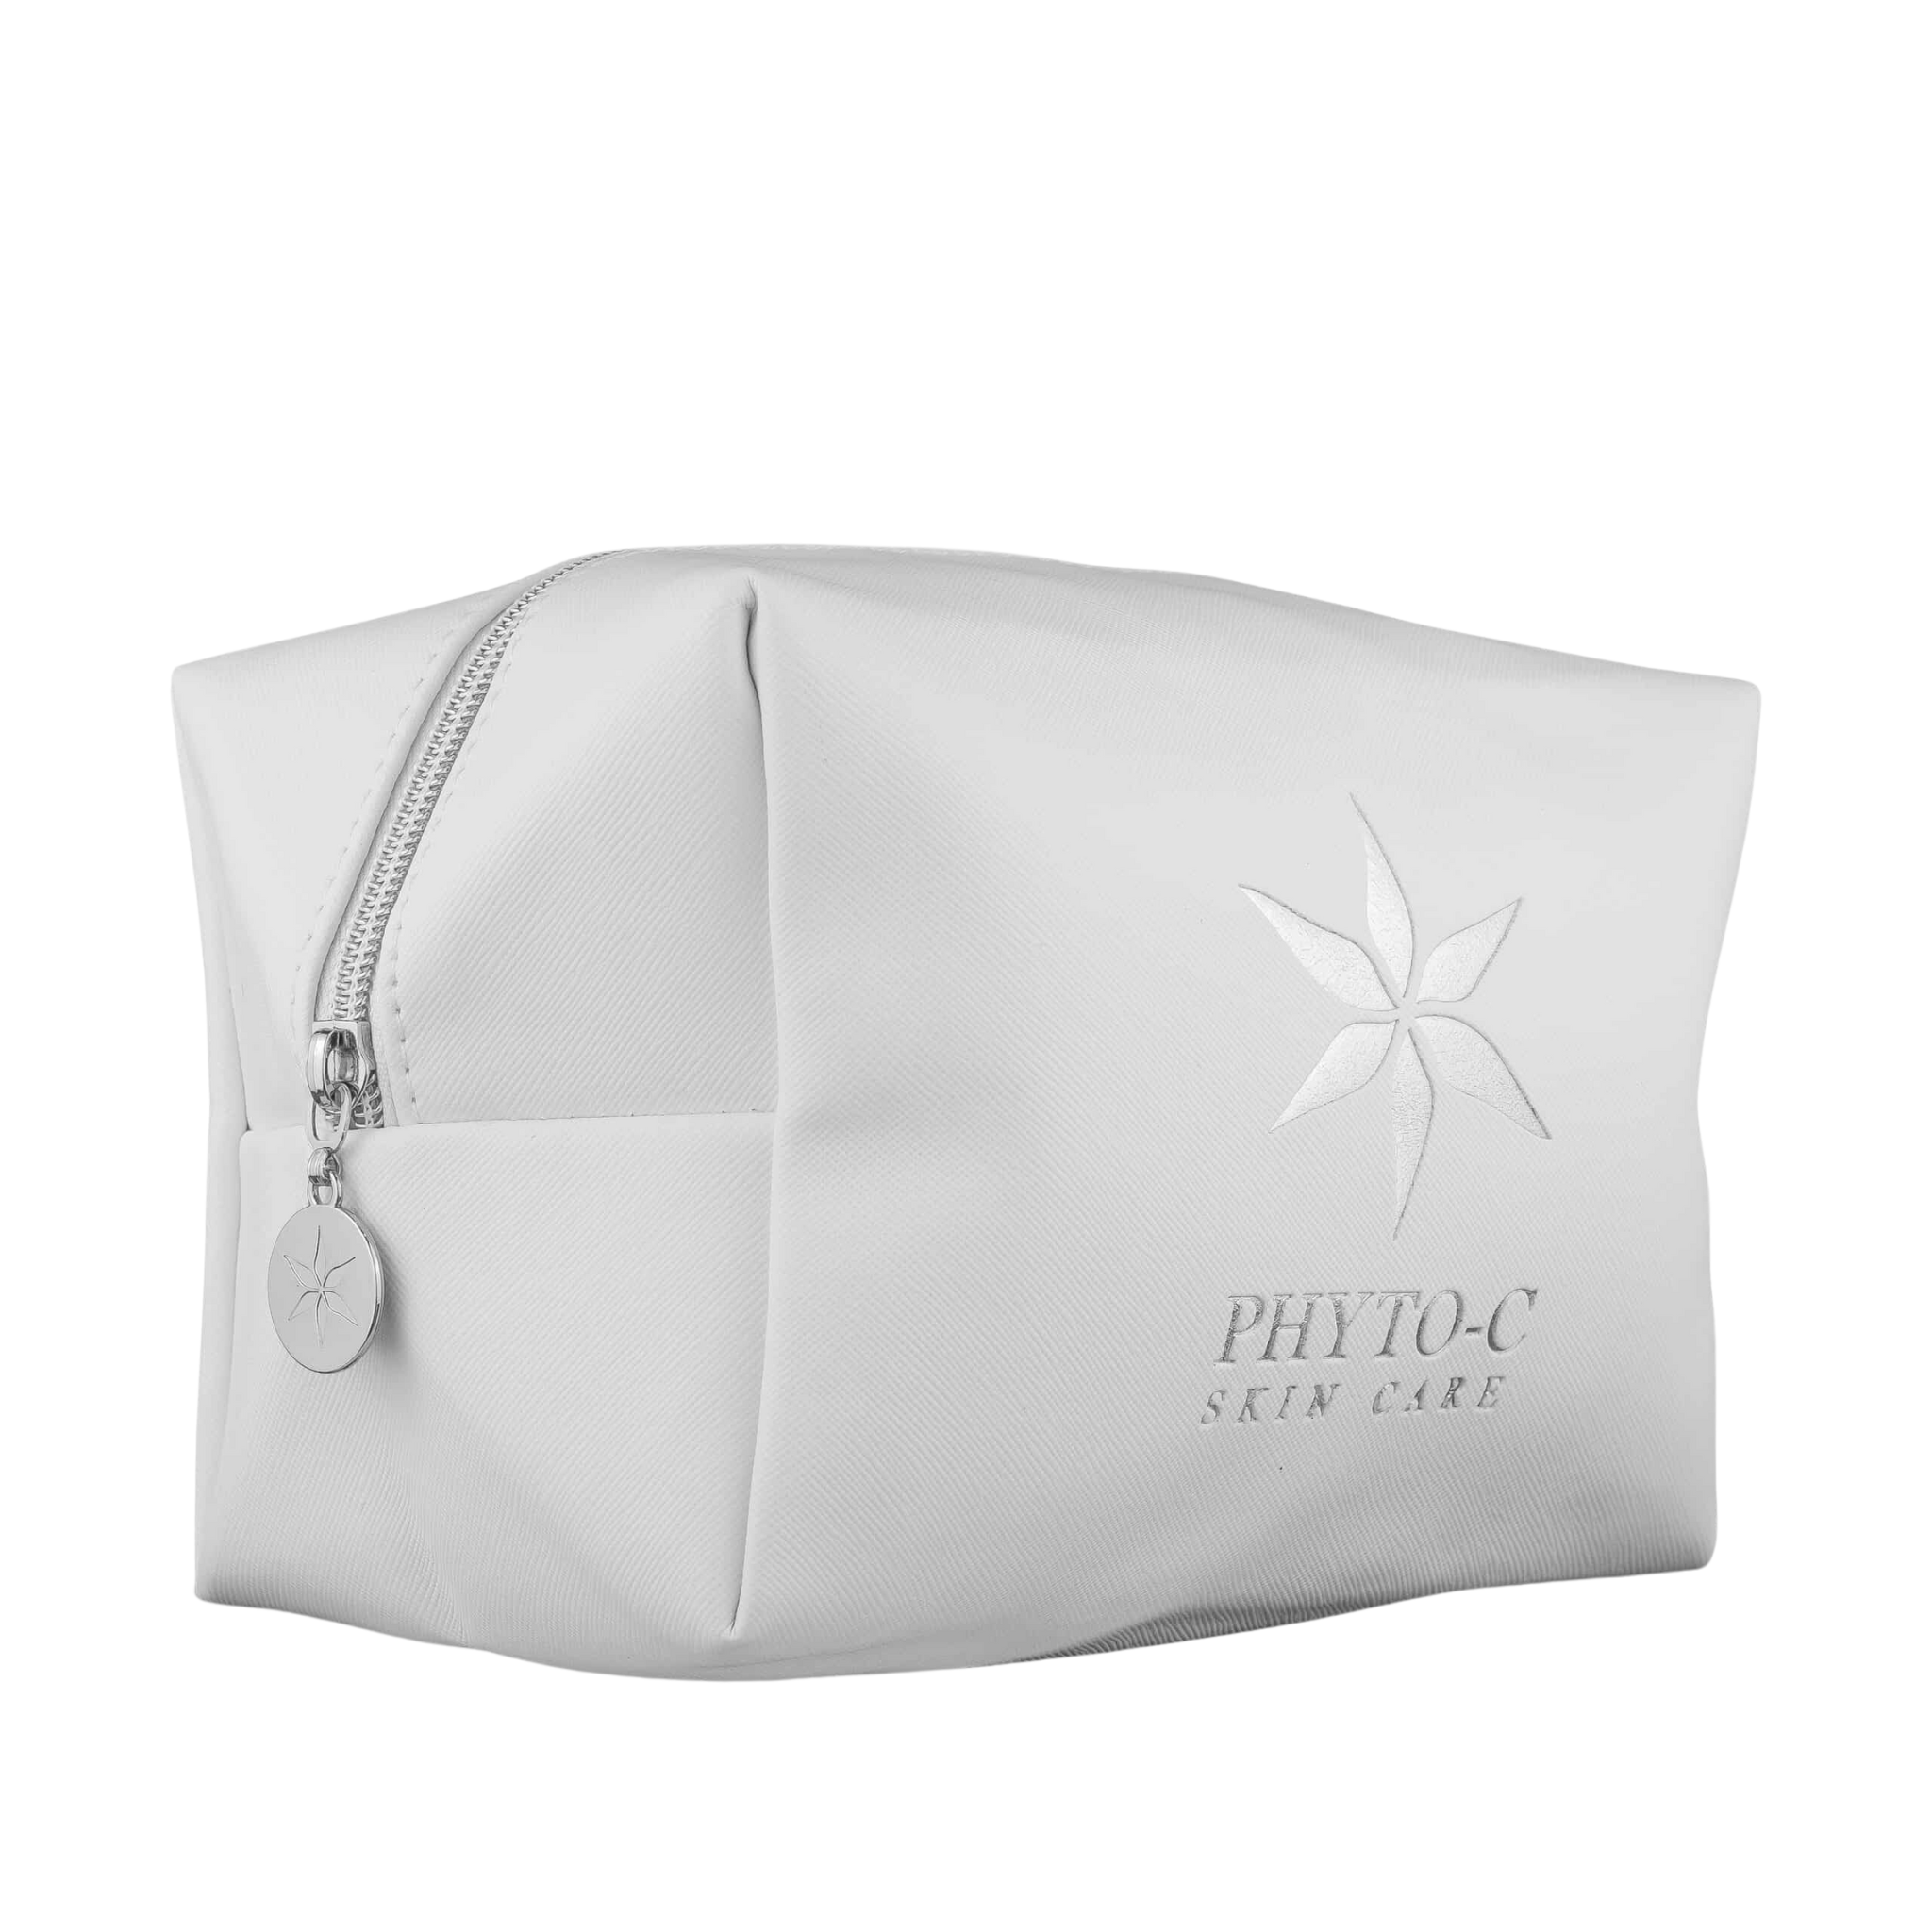 Phyto-C White Gift Bag